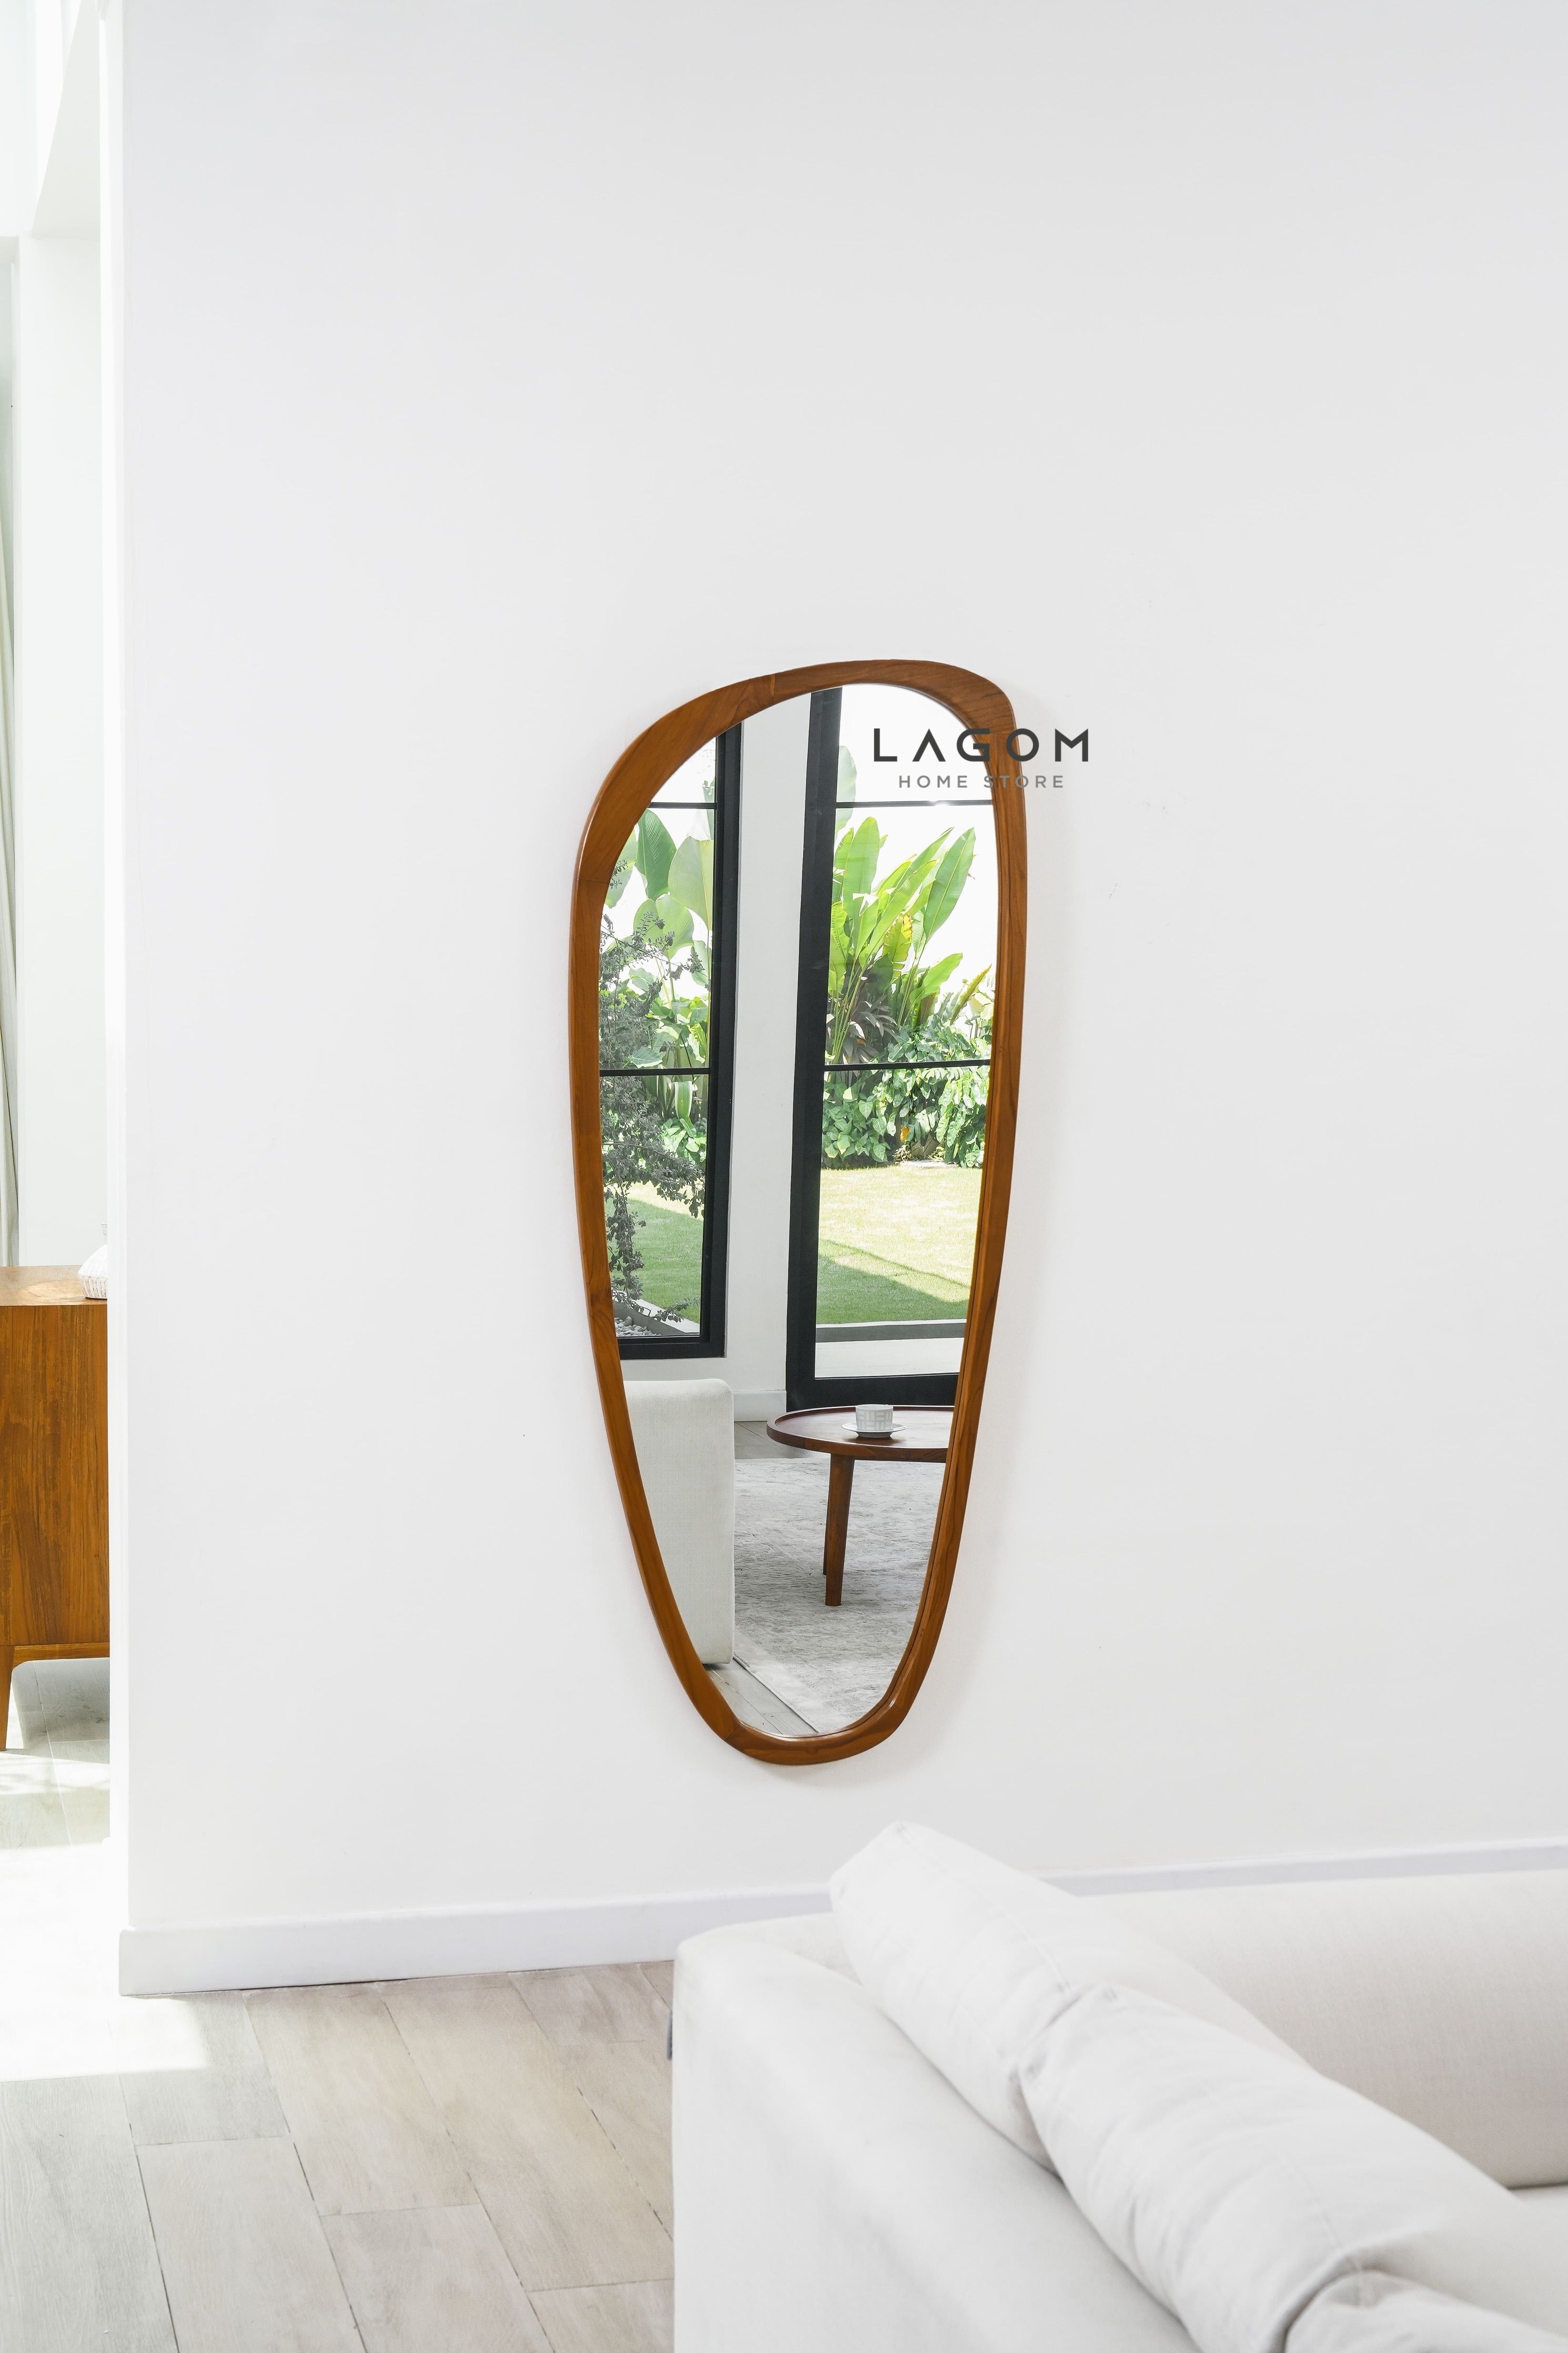 Cermin Dekoratif Frame Kayu Jati Solid - Tinggi 167 cm Mirror Lagom Home Store Jati Furnitur Teak Furniture Jakarta